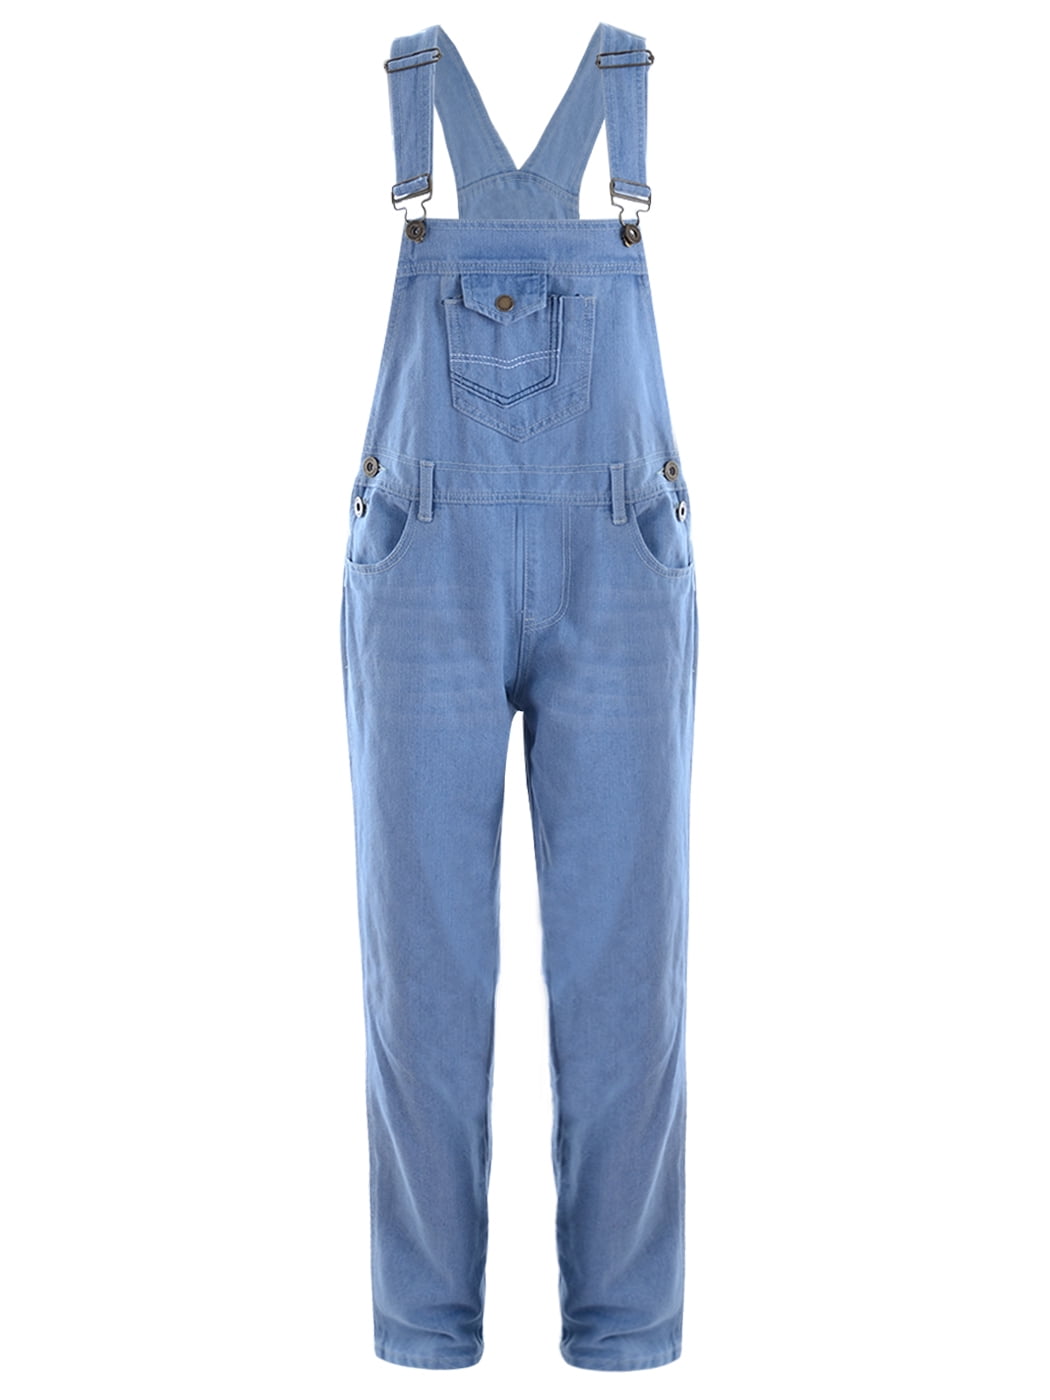 blue jean overalls walmart